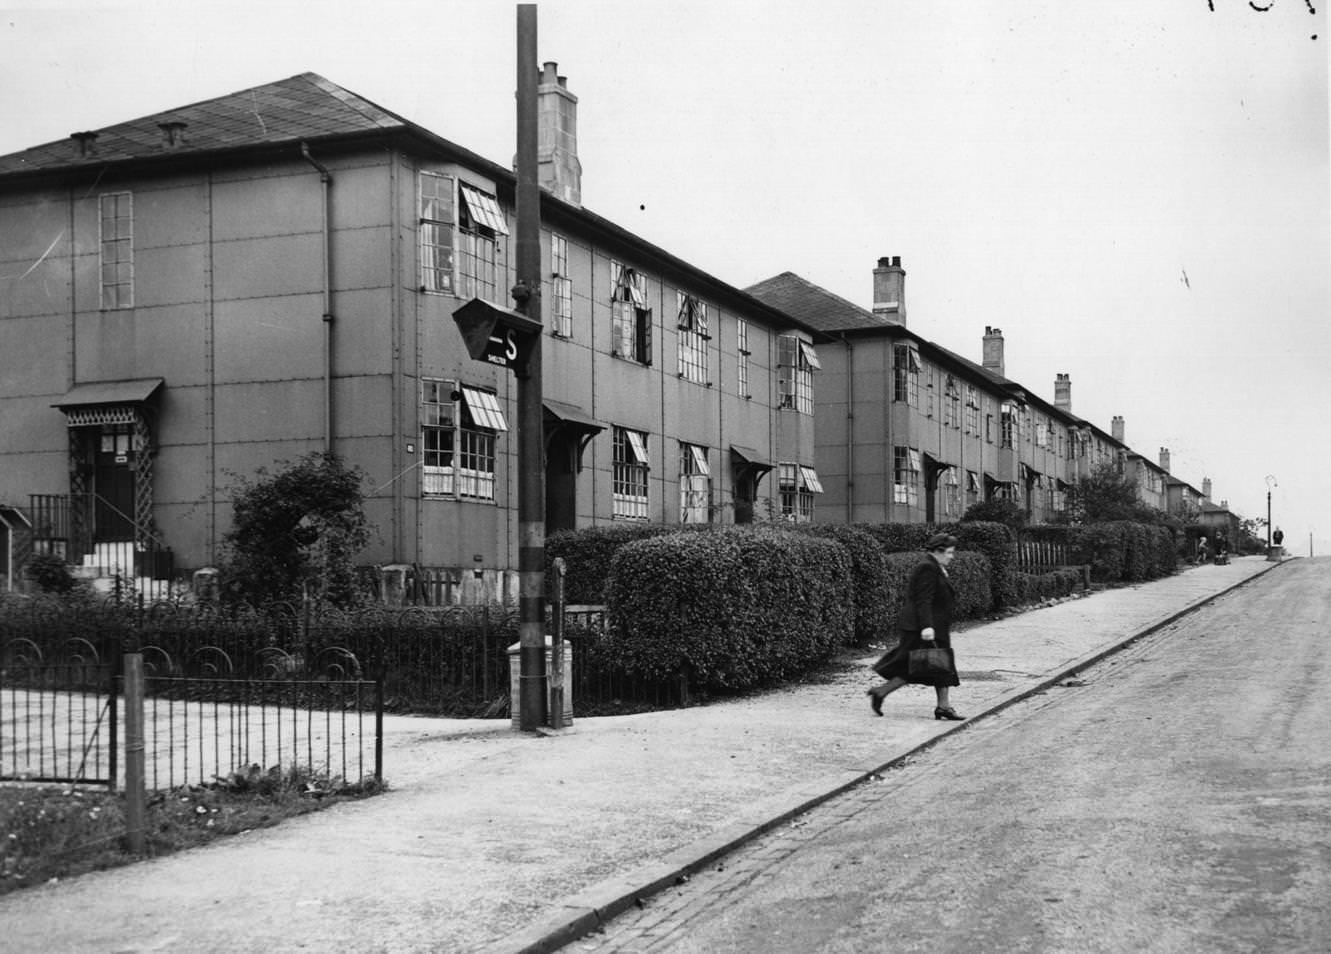 Housing on an estate in Glasgow, Scotland, 1960